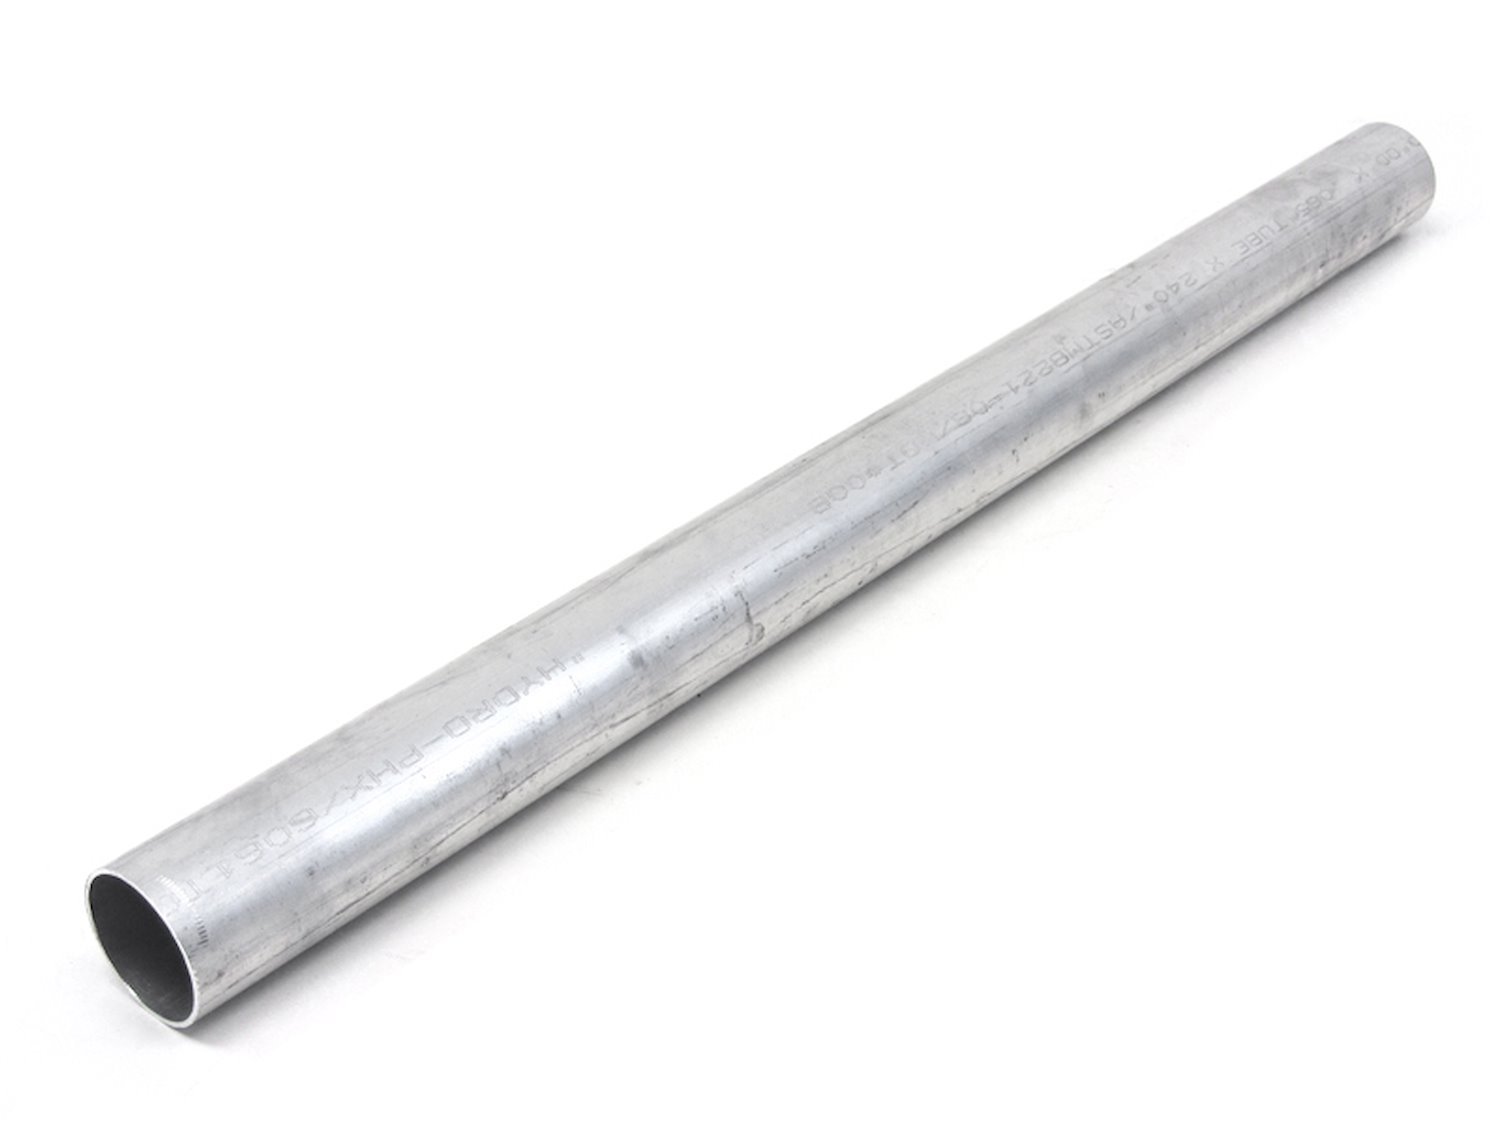 AST-3F-238 Aluminum Tubing, 6061 Aluminum, Straight Tubing, 2-3/8 in. OD, Seamless, Raw Finish, 3 ft. Long